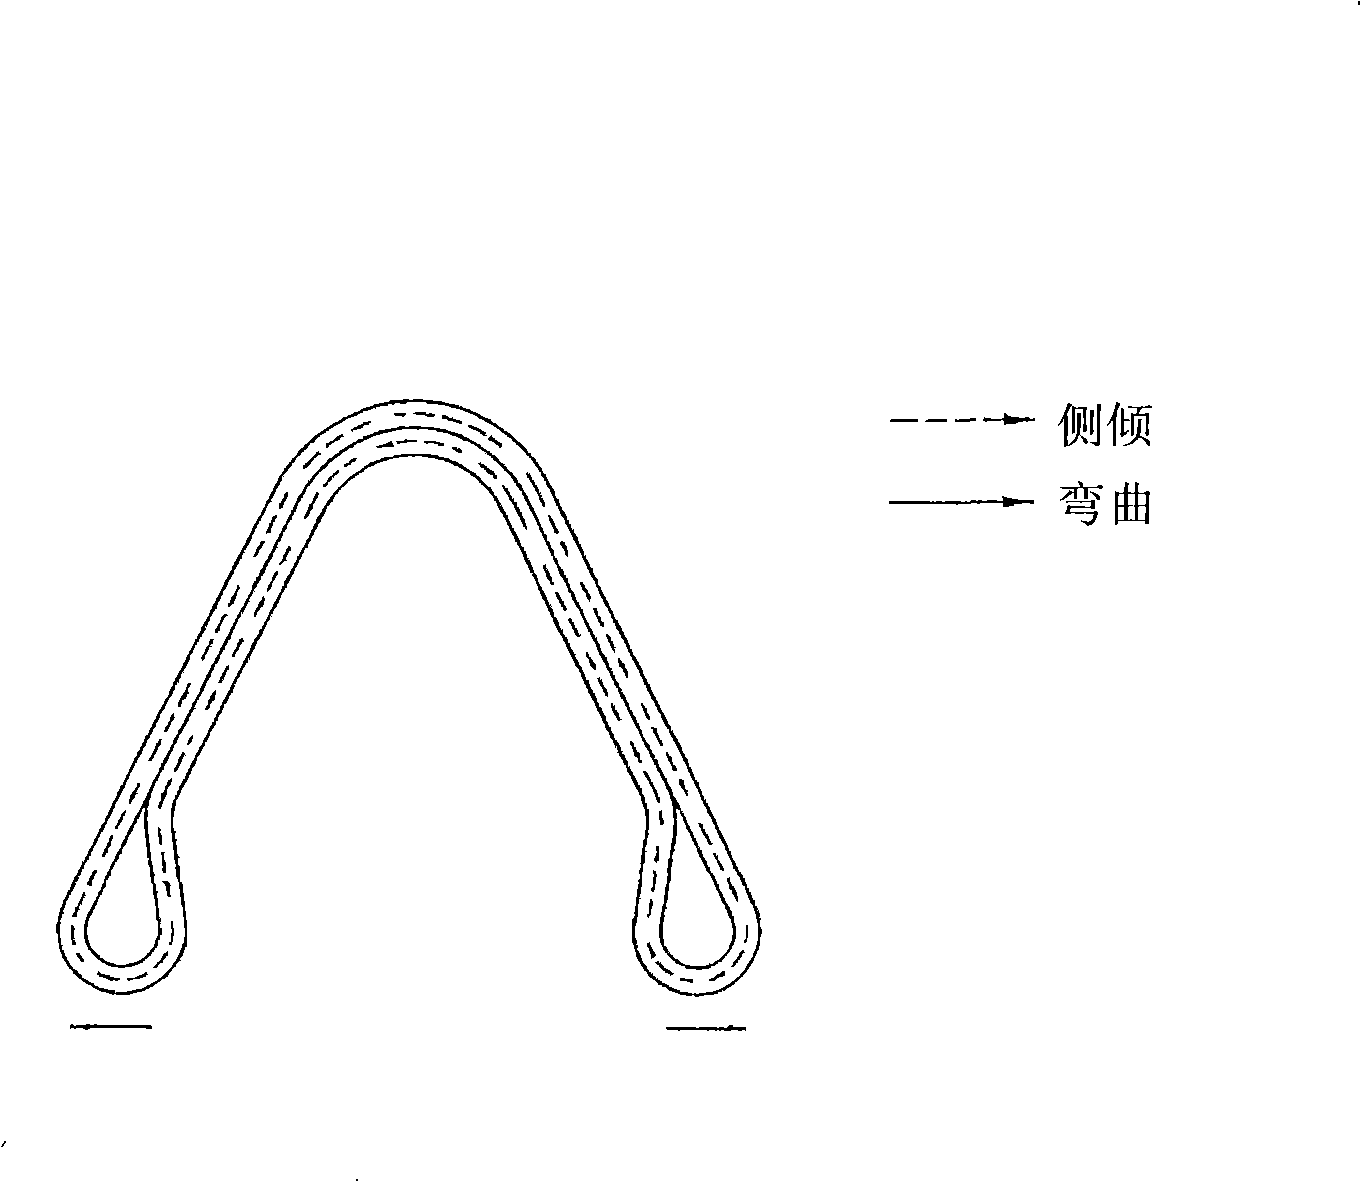 Tubular beam of torsion beam axle type suspension